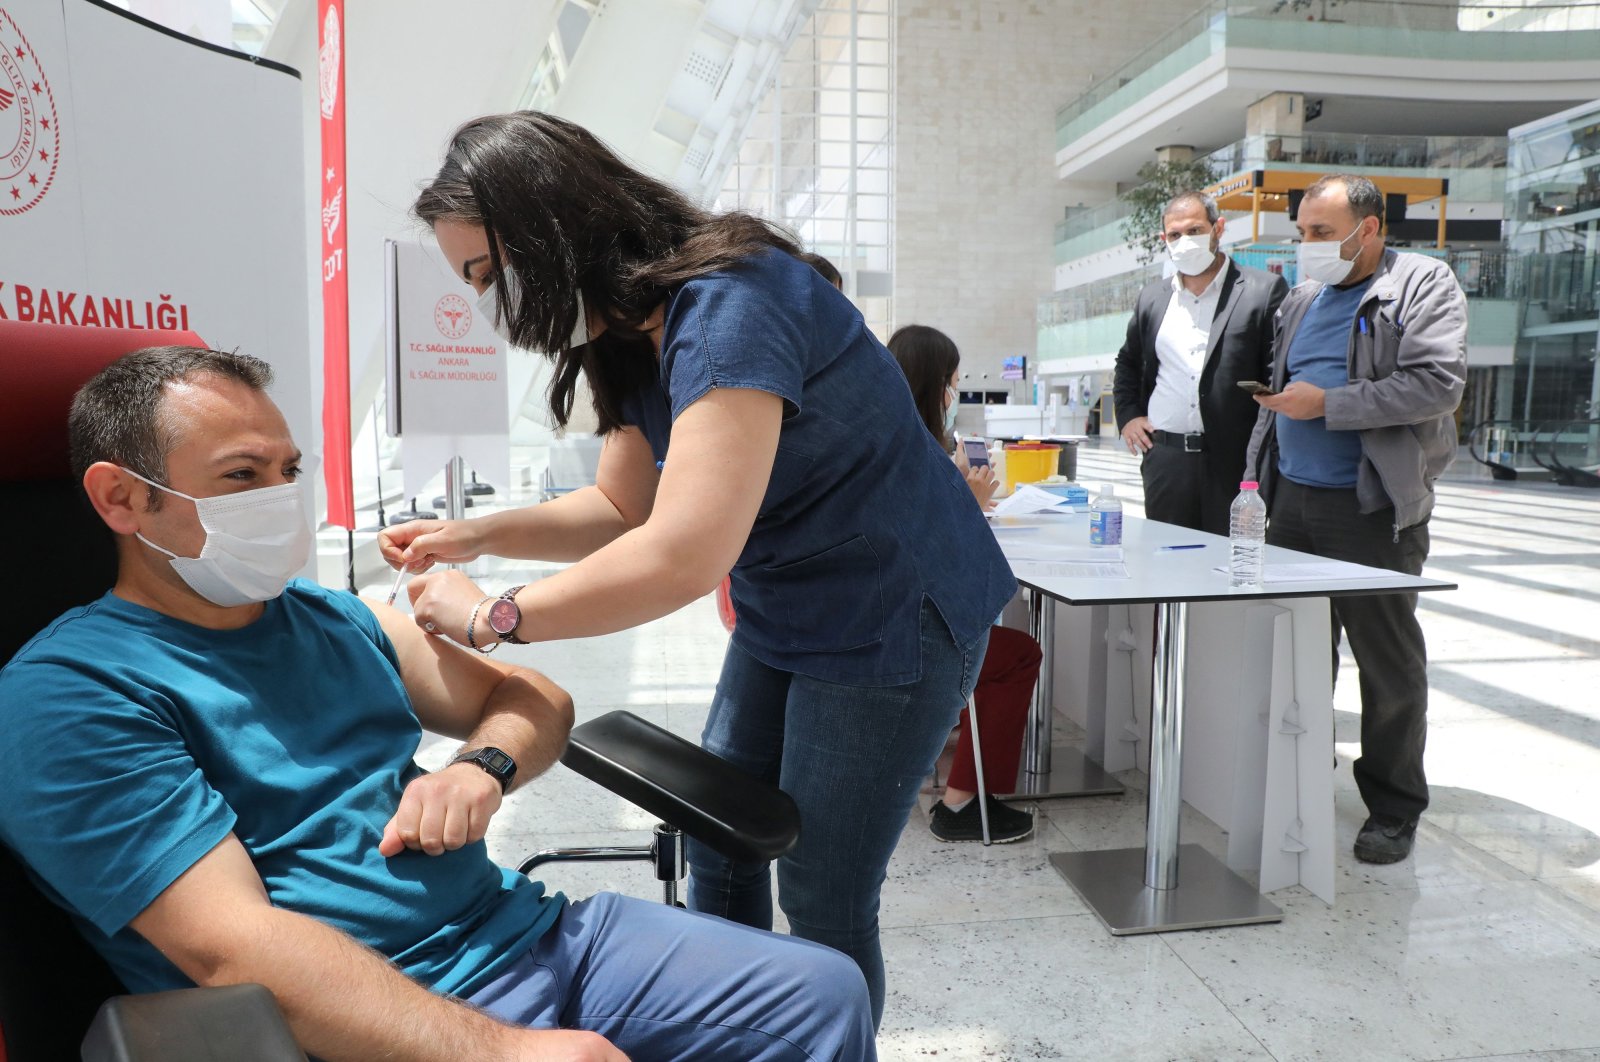 A man receives a dose of a COVID-19 vaccine at a vaccination center set up at Ankara High-Speed Train Station, June 28, 2021, Ankara, Turkey. (AFP Photo)